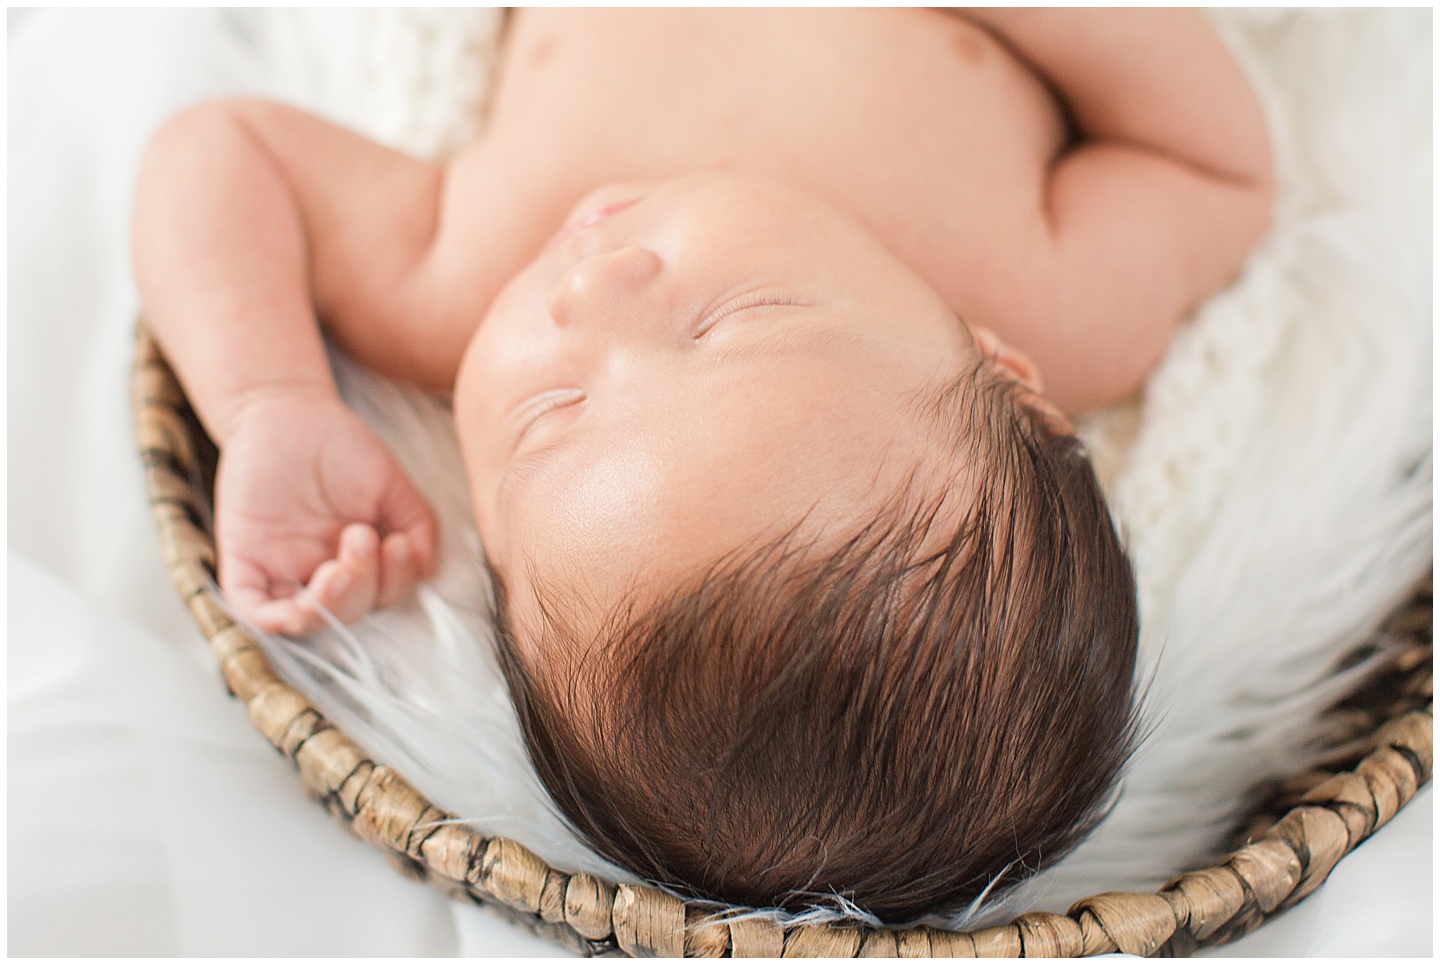 Baby Boy Newborn Session Tiffany Joy W Photography